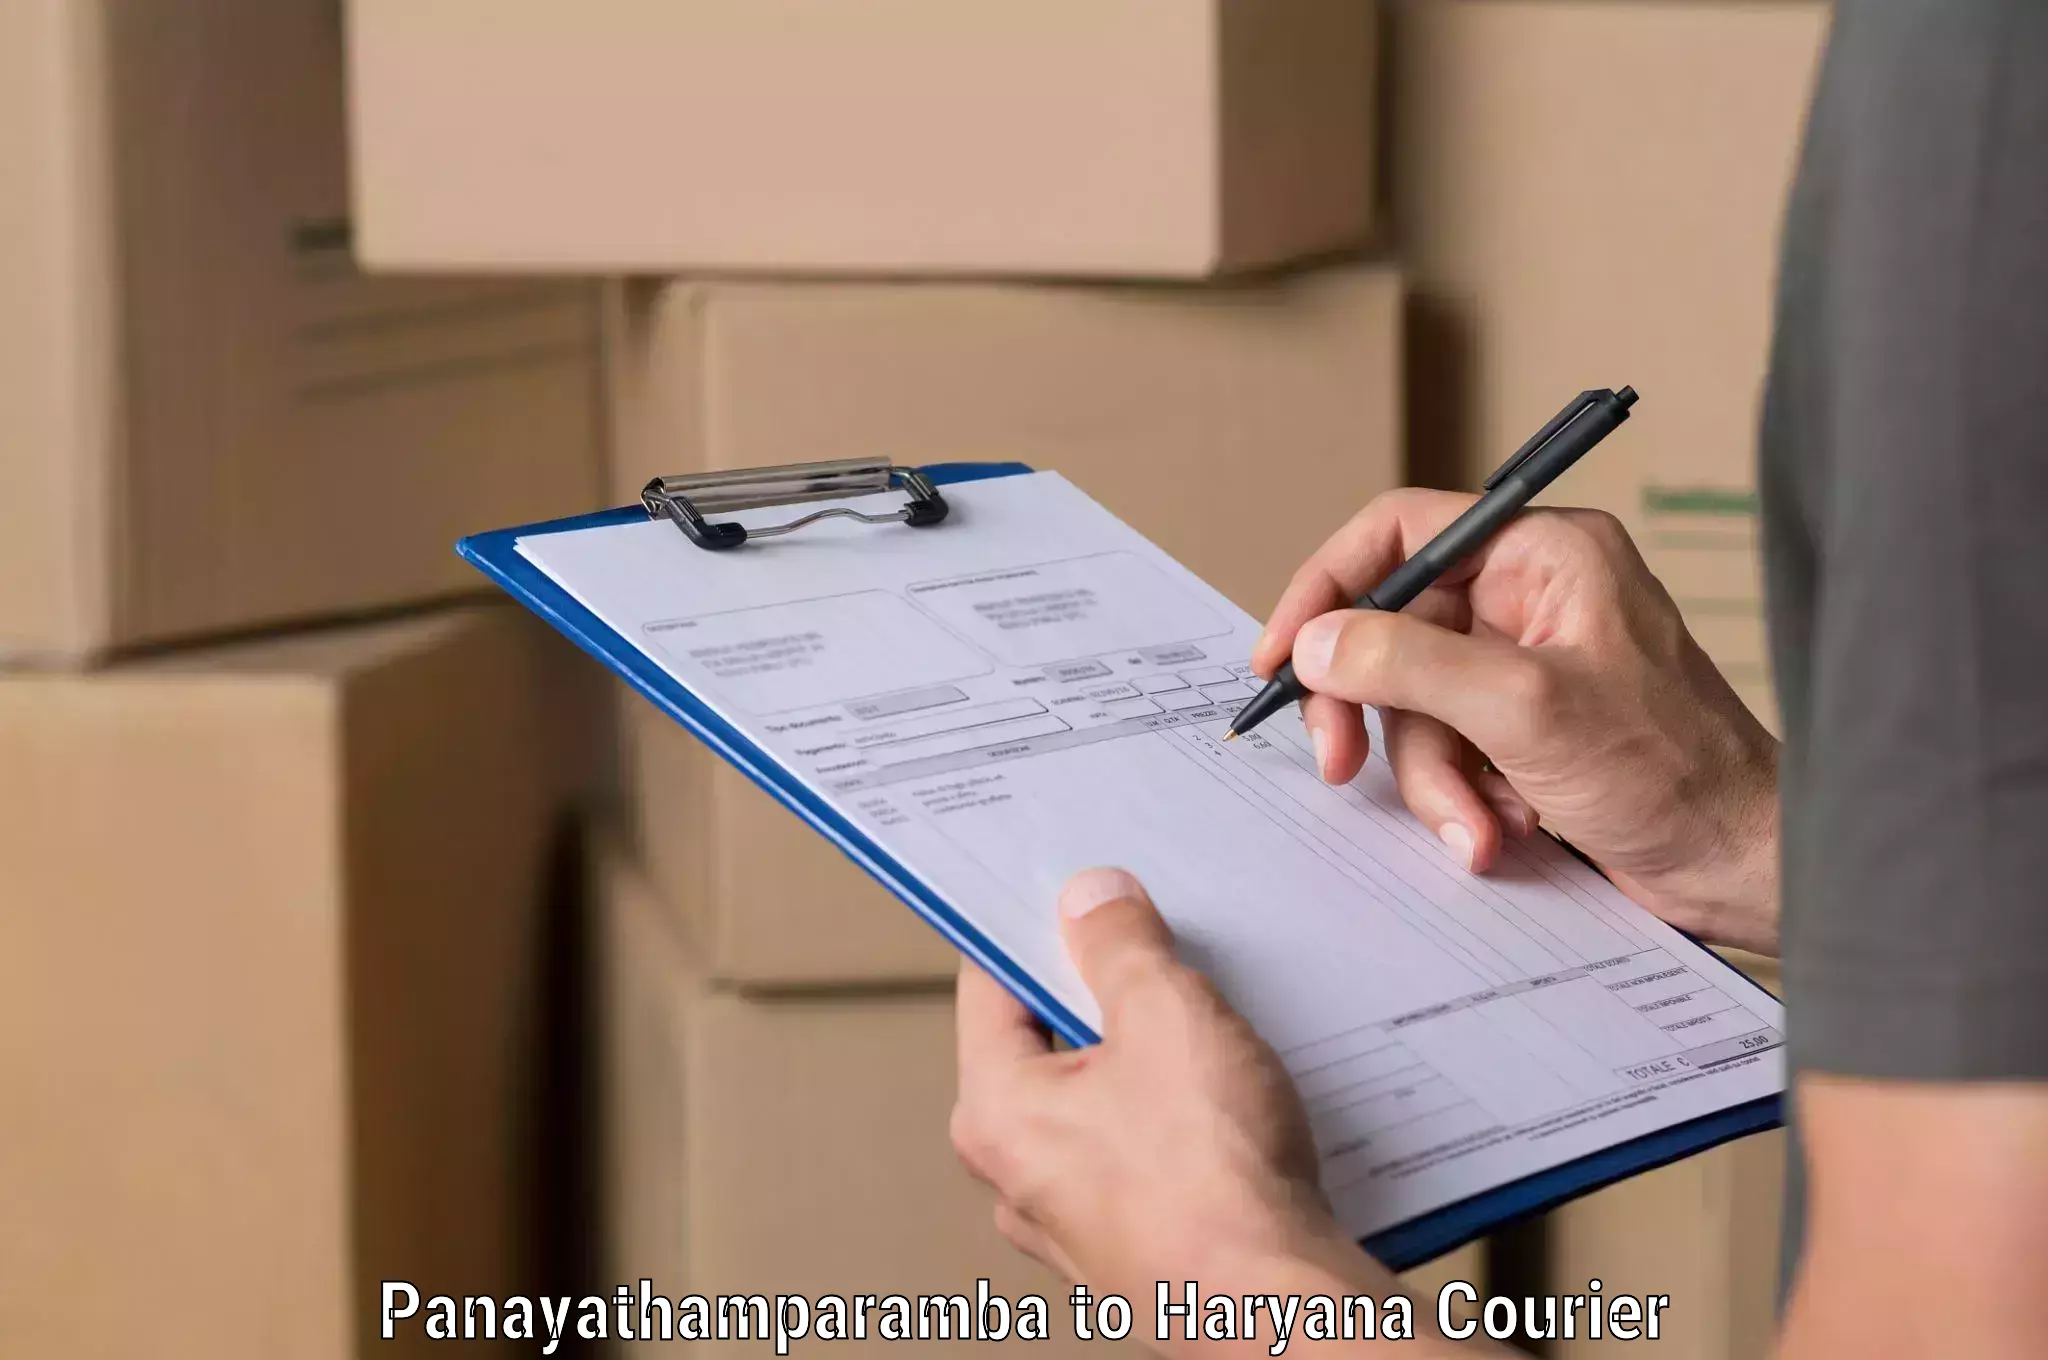 Courier service comparison Panayathamparamba to Charkhari